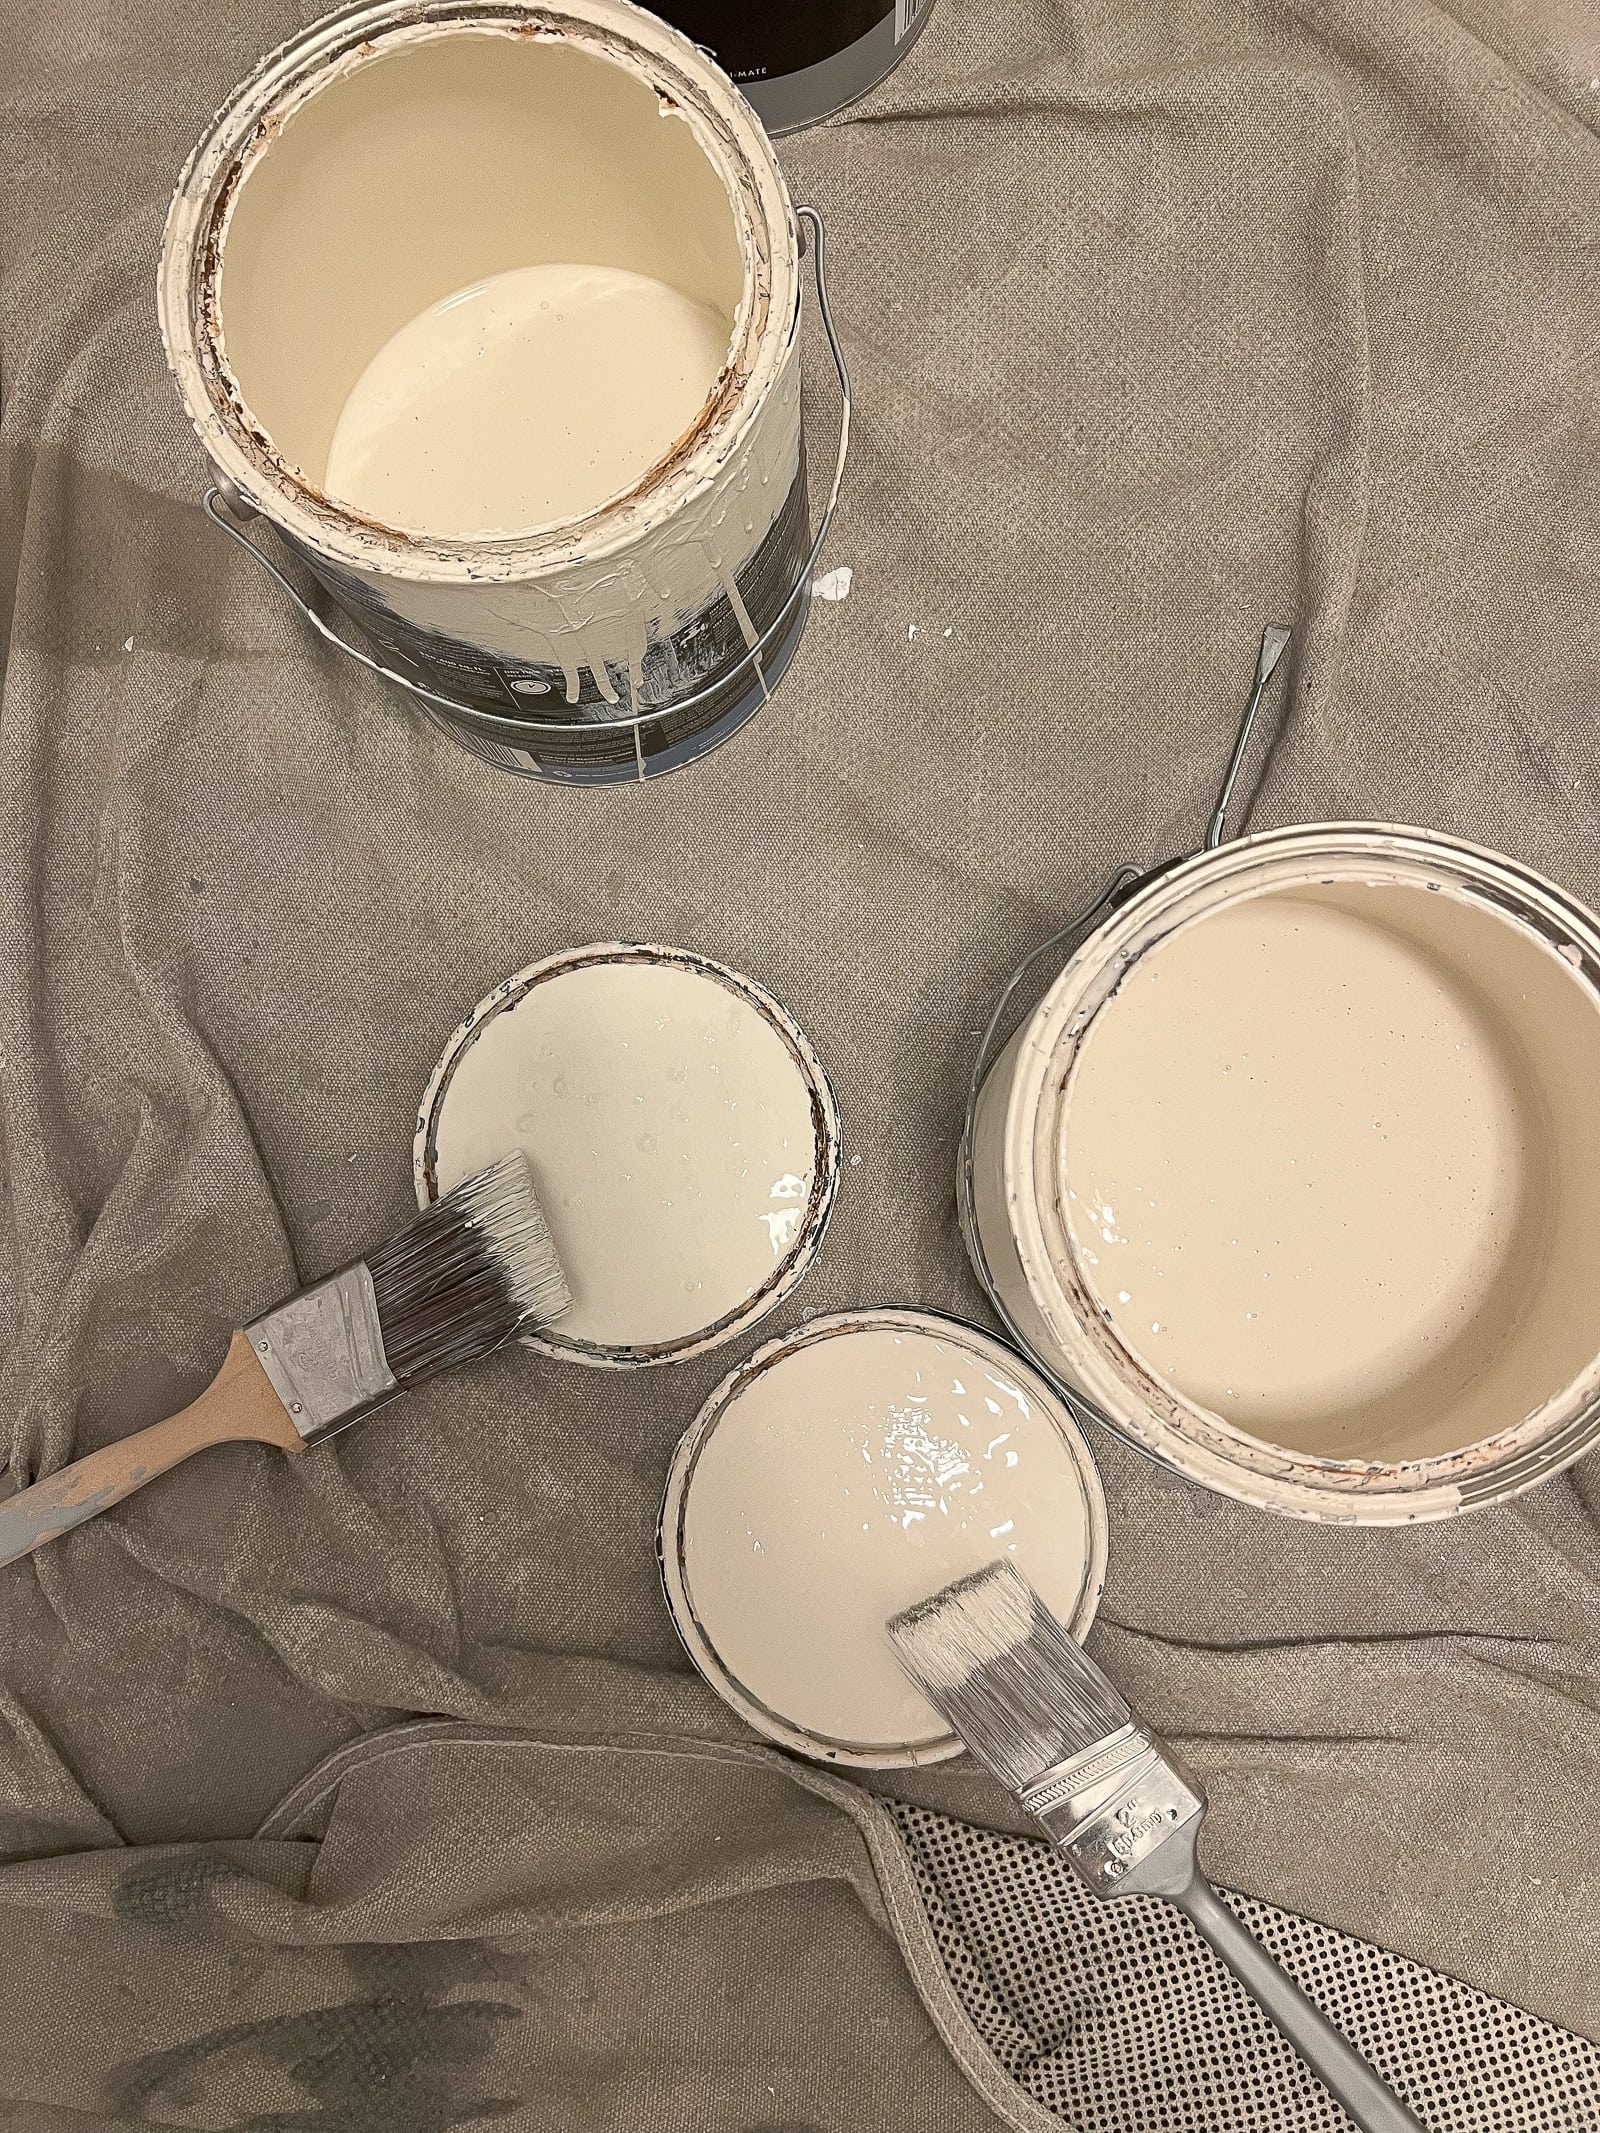 Choosing a warm white paint color